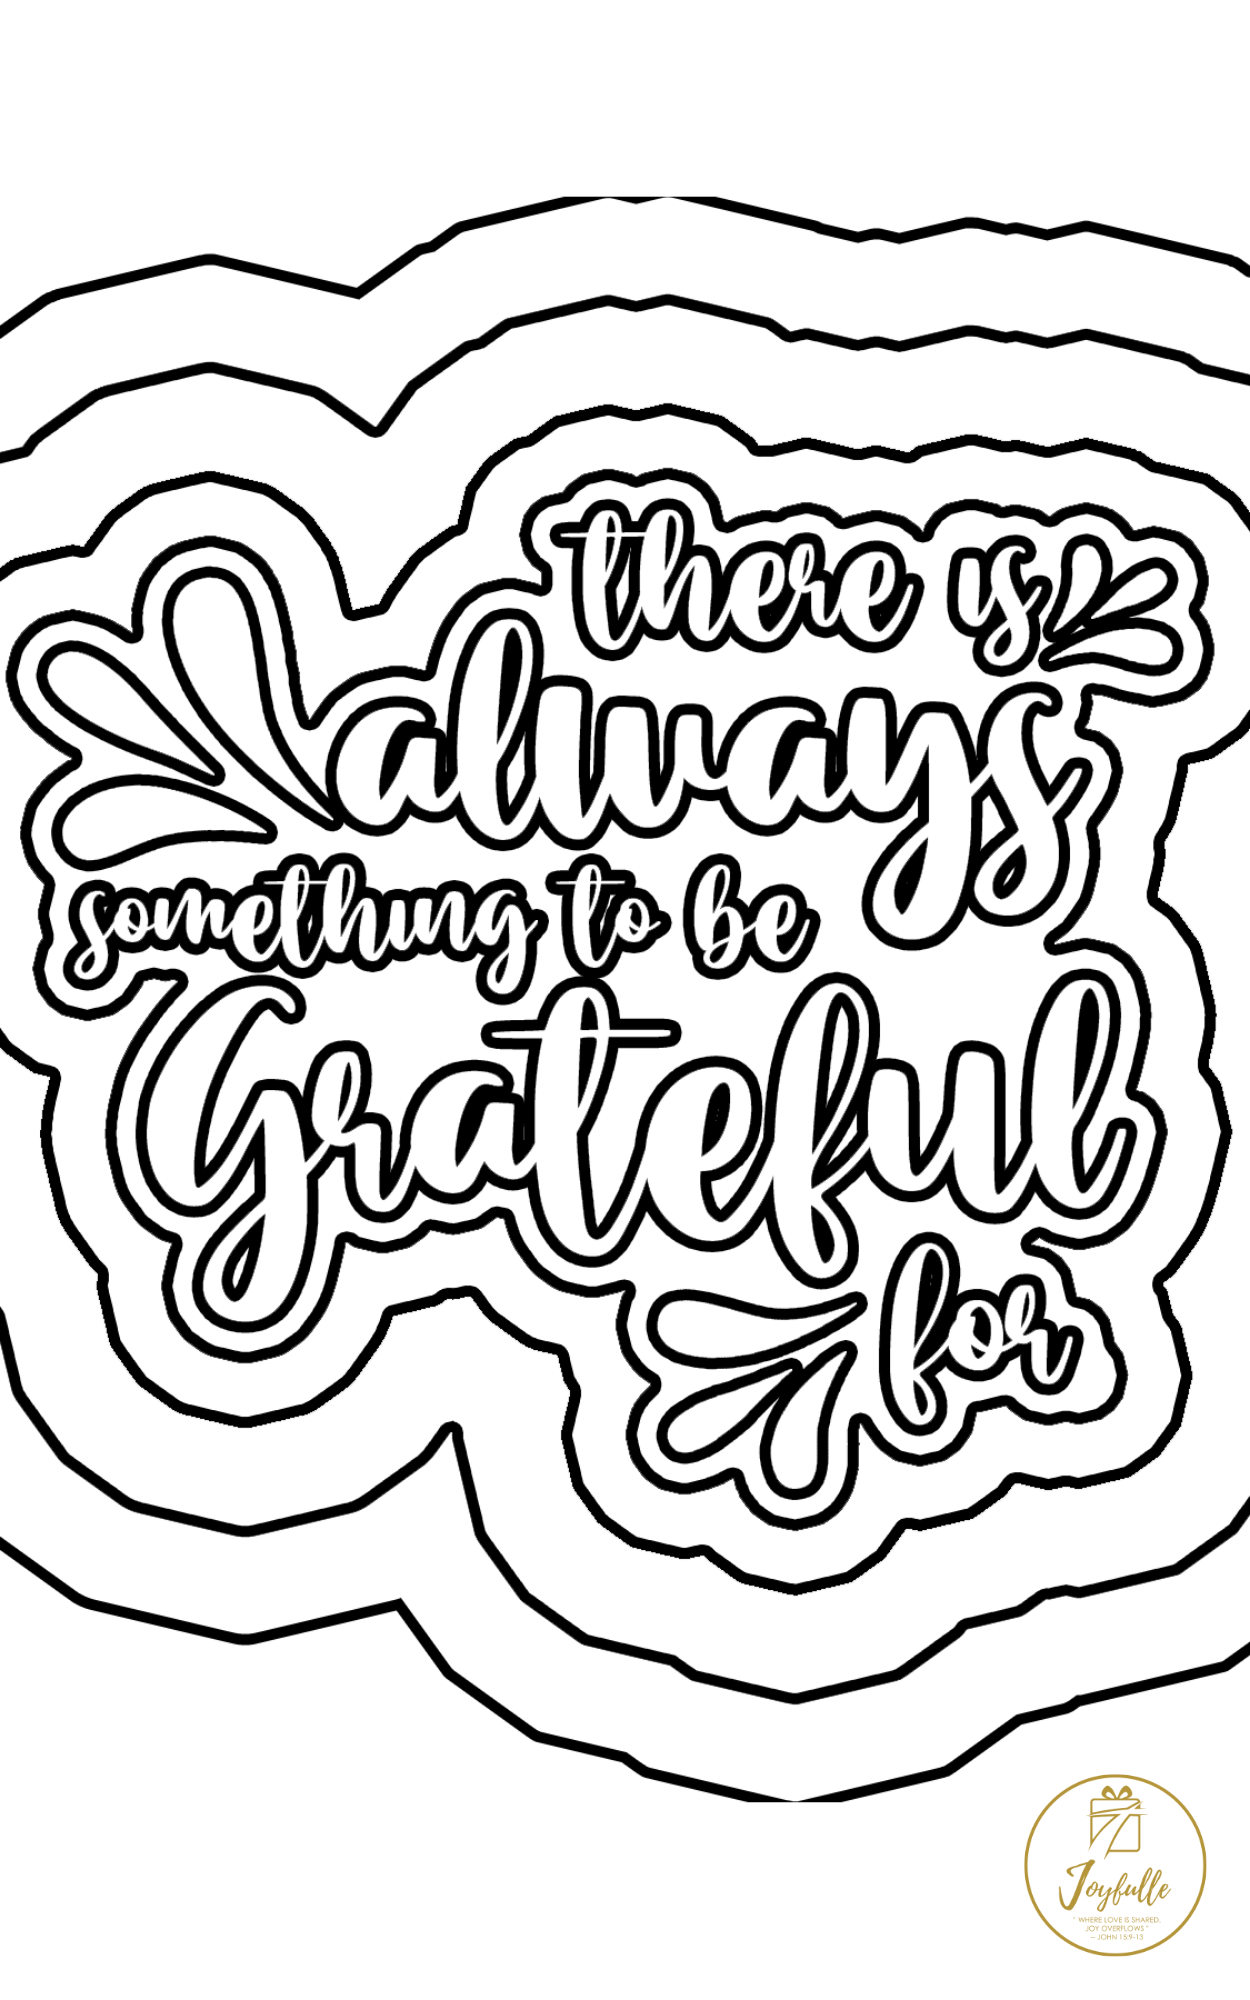 Gratitude Day Greeting Card 09